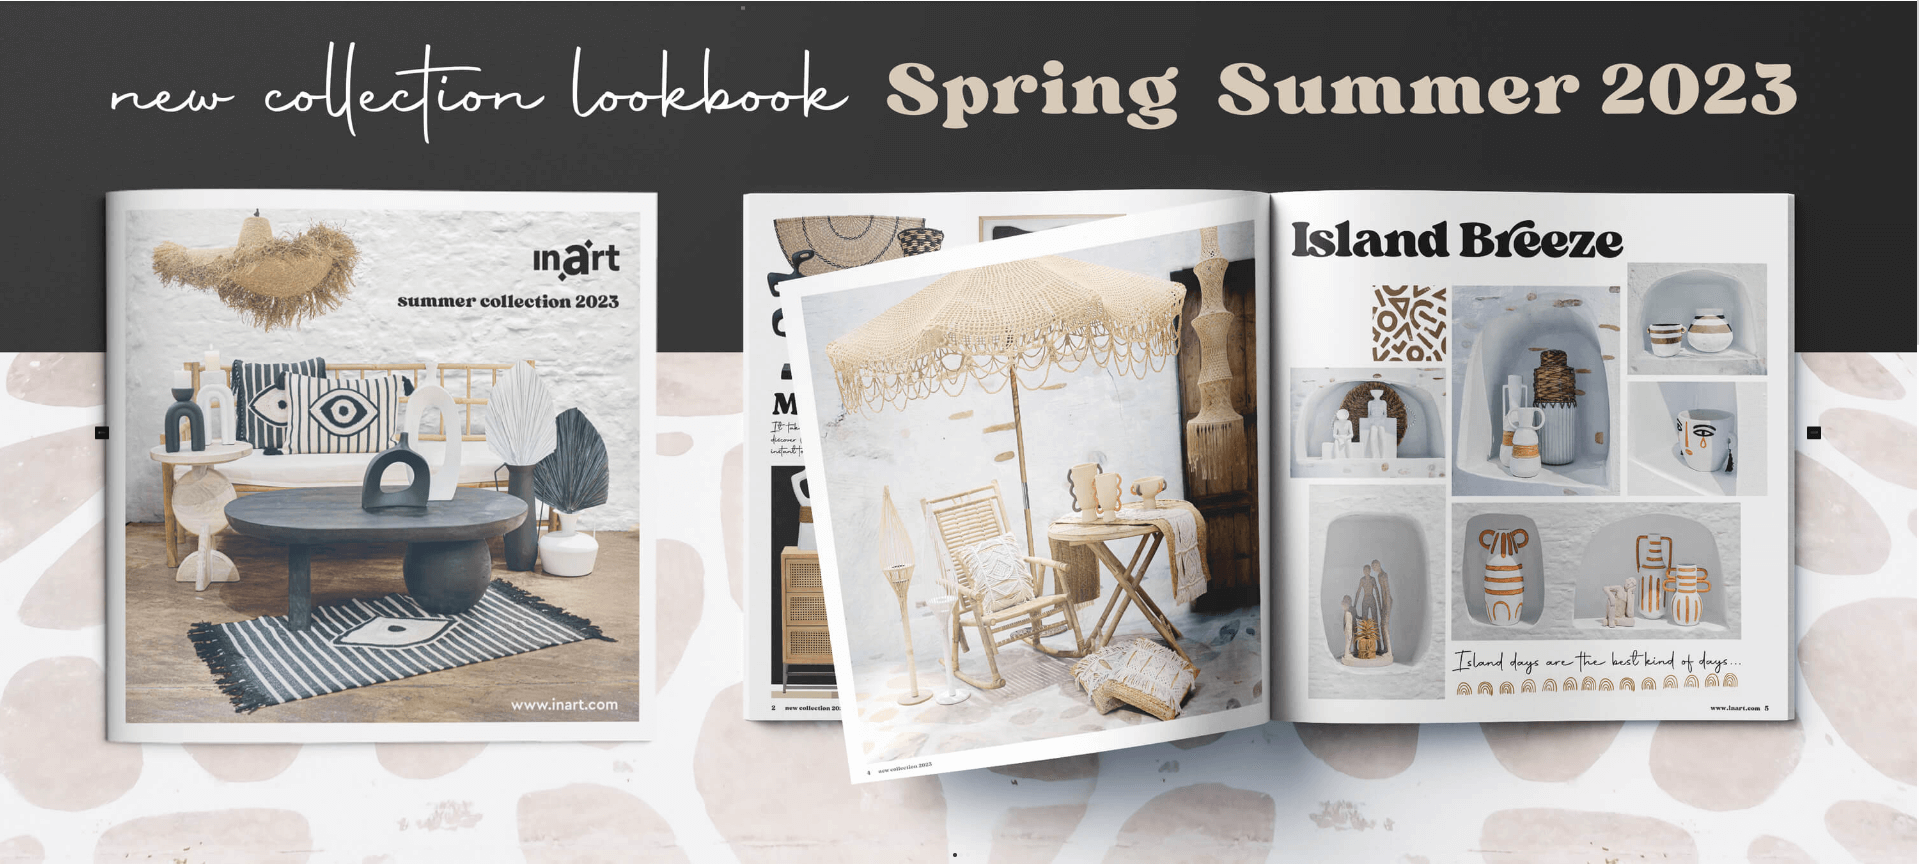 inart Spring Brochure 2023